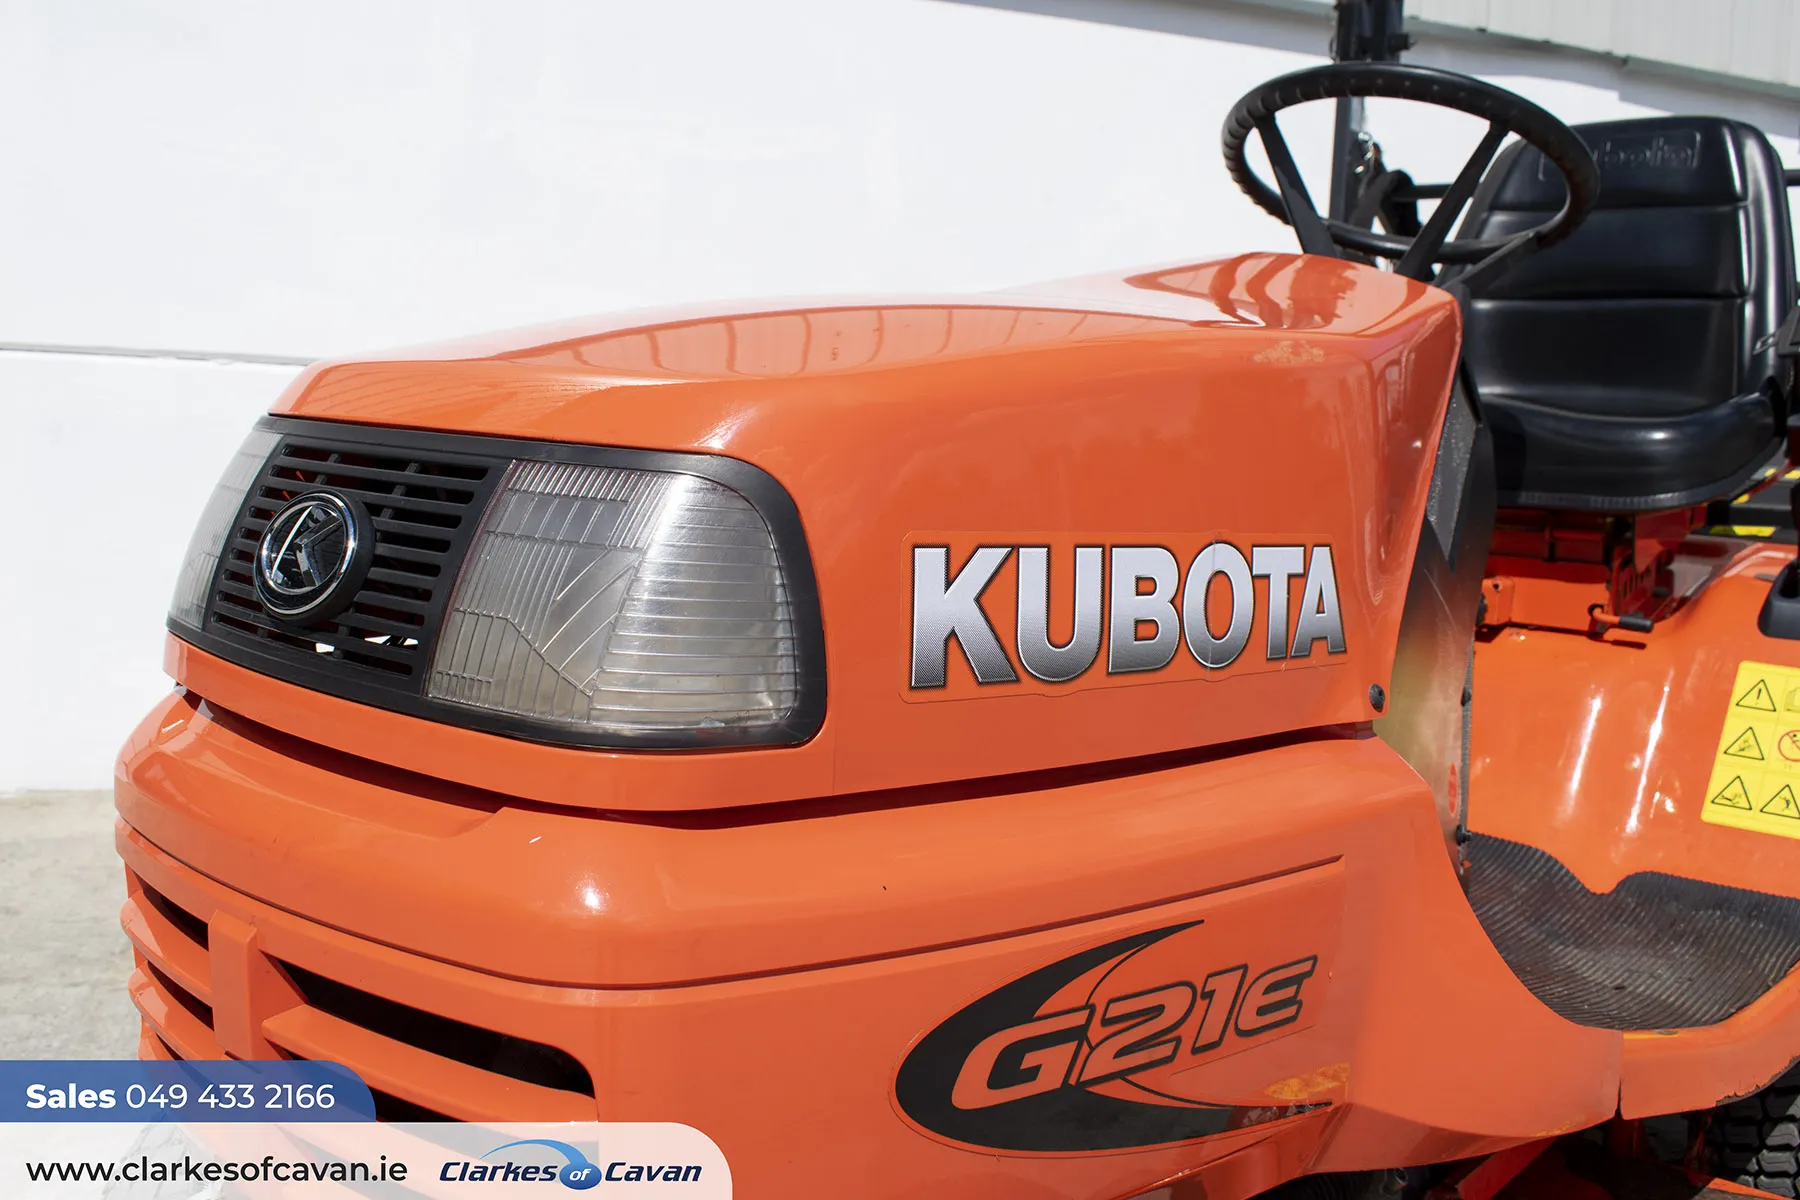 Used 2017 Kubota G21e HD Lawnmower